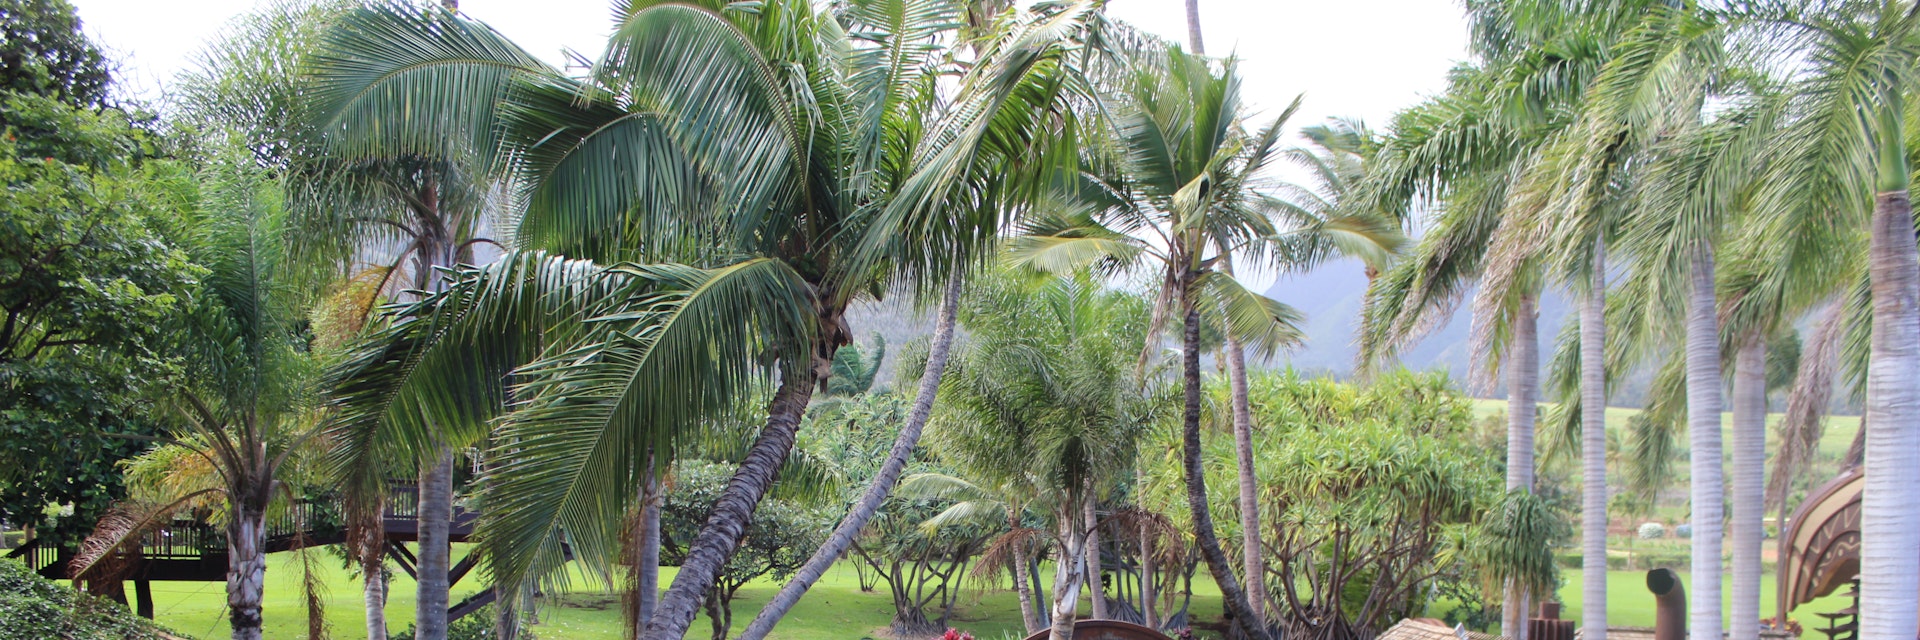 Maui Tropical Plantation
